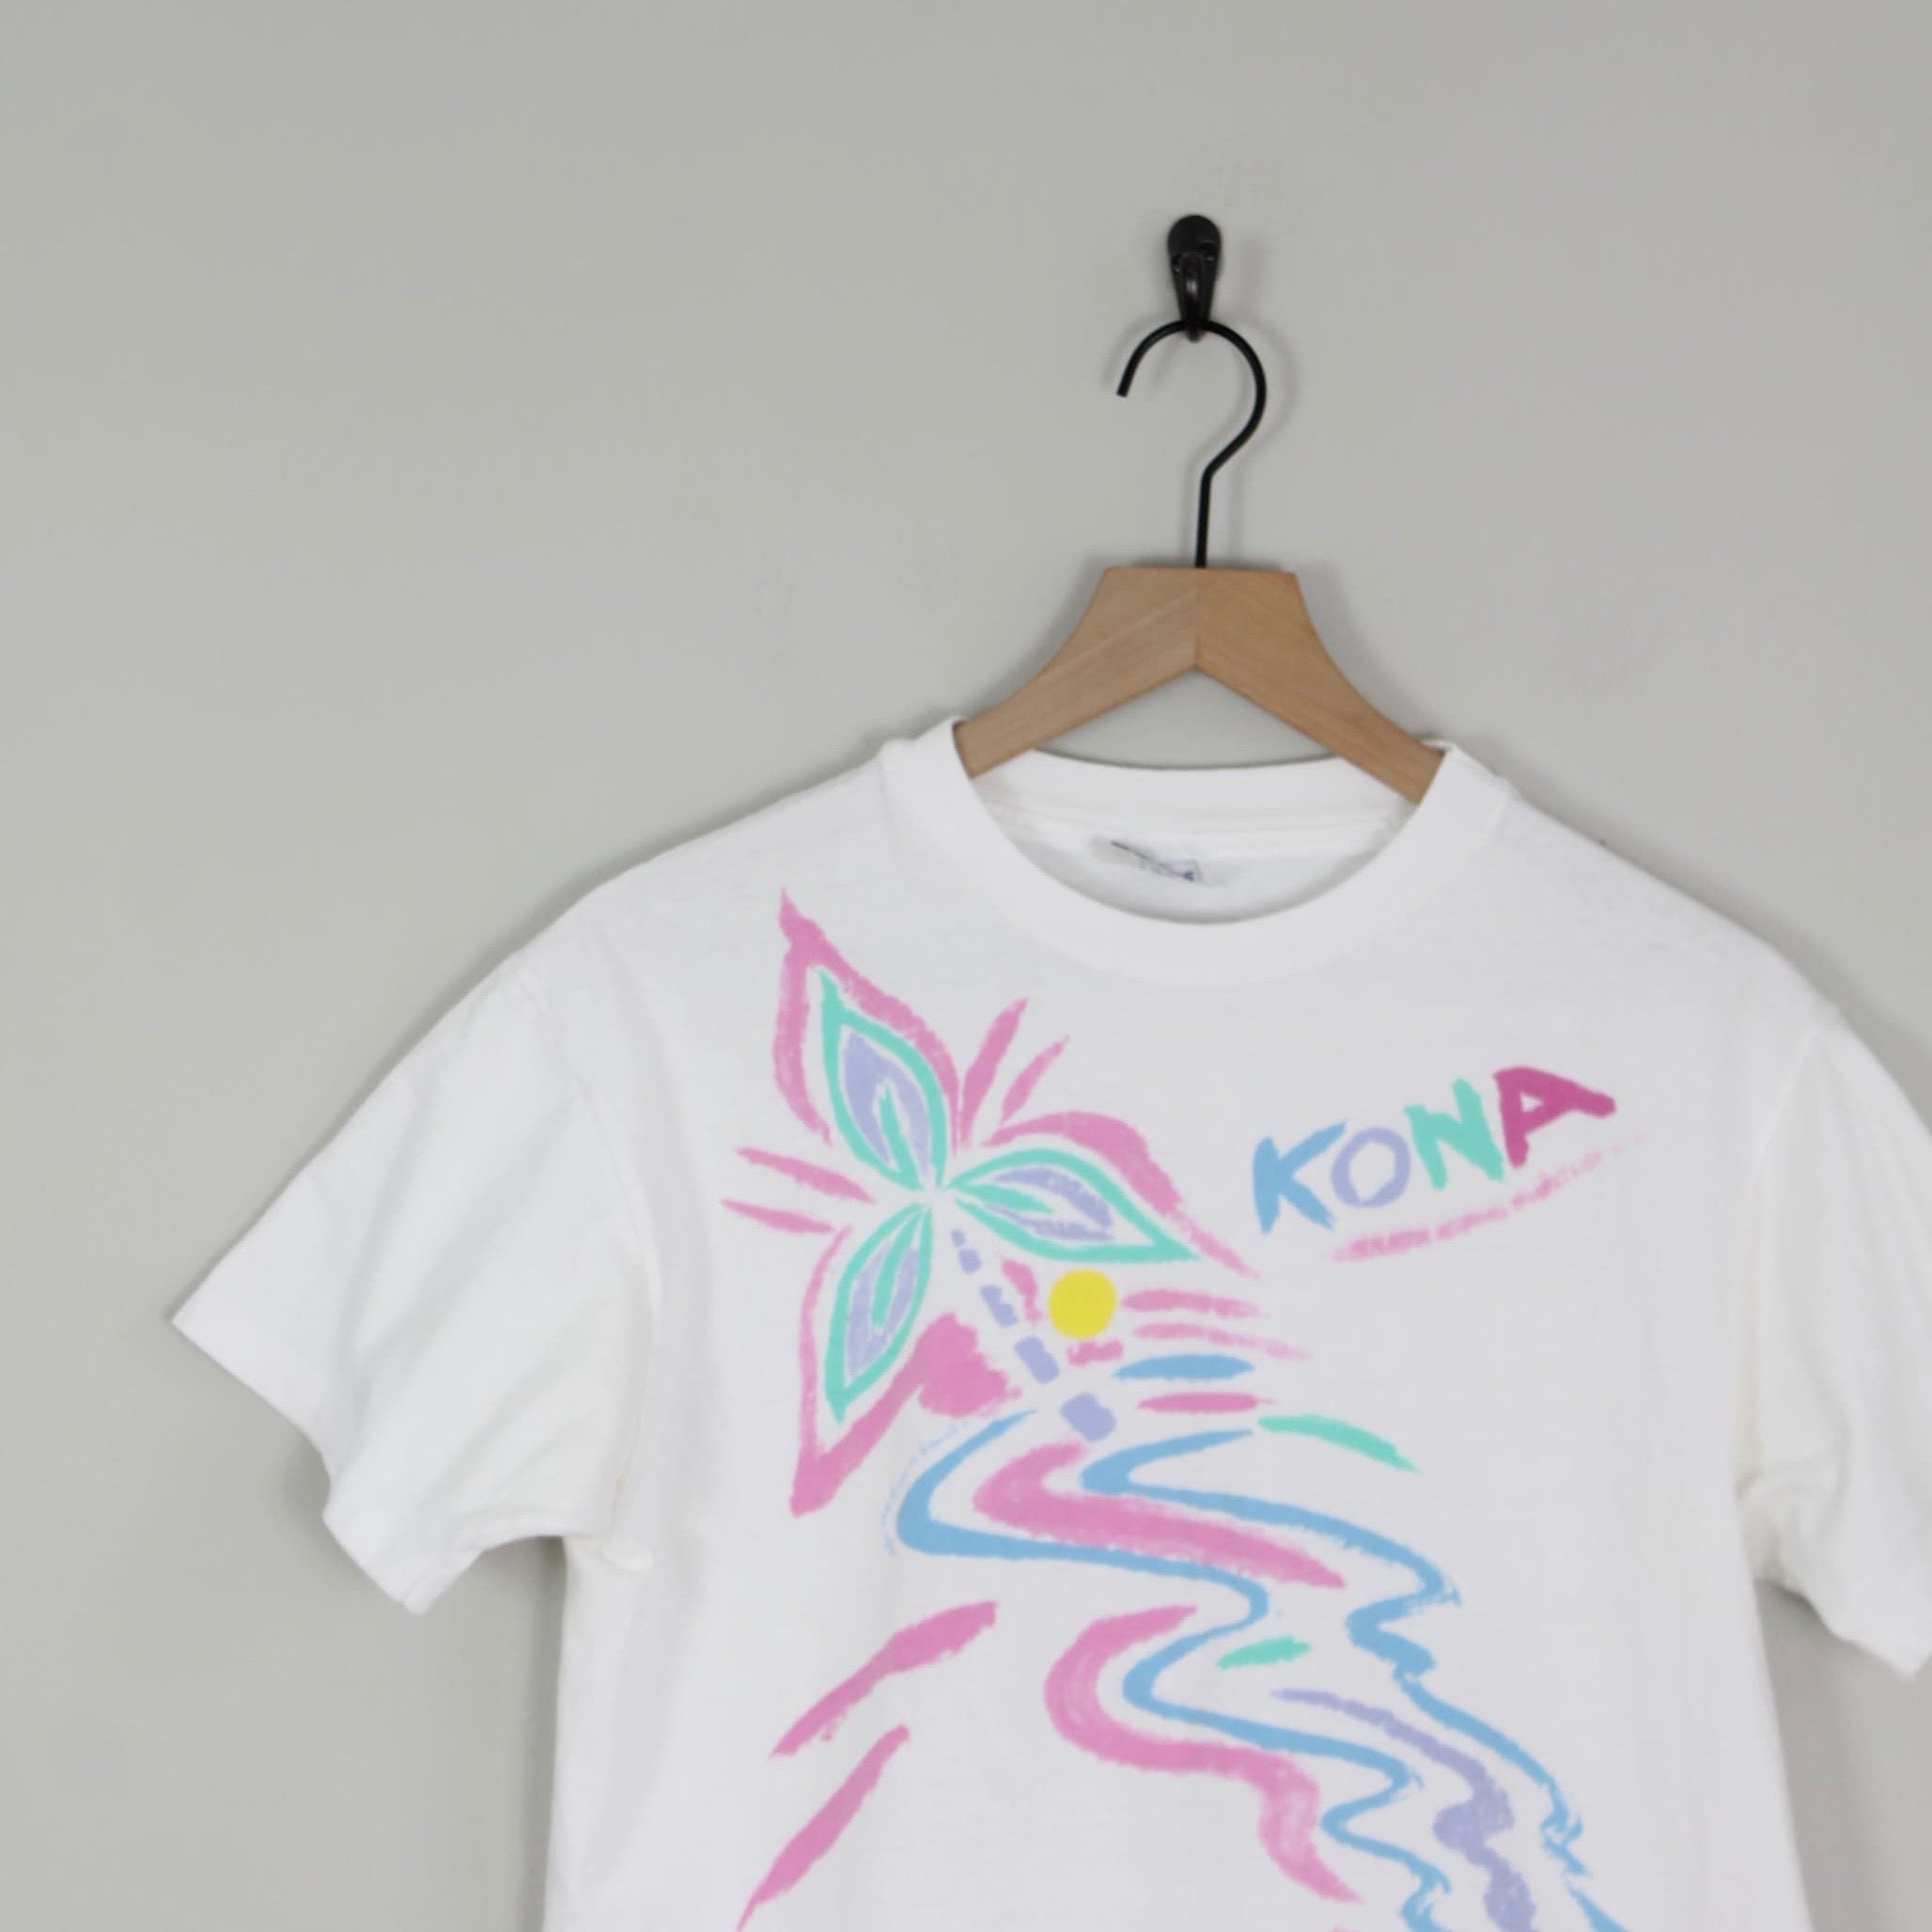 Vintage Pastel Tropical Kona Hawaii T Shirt, Size Large